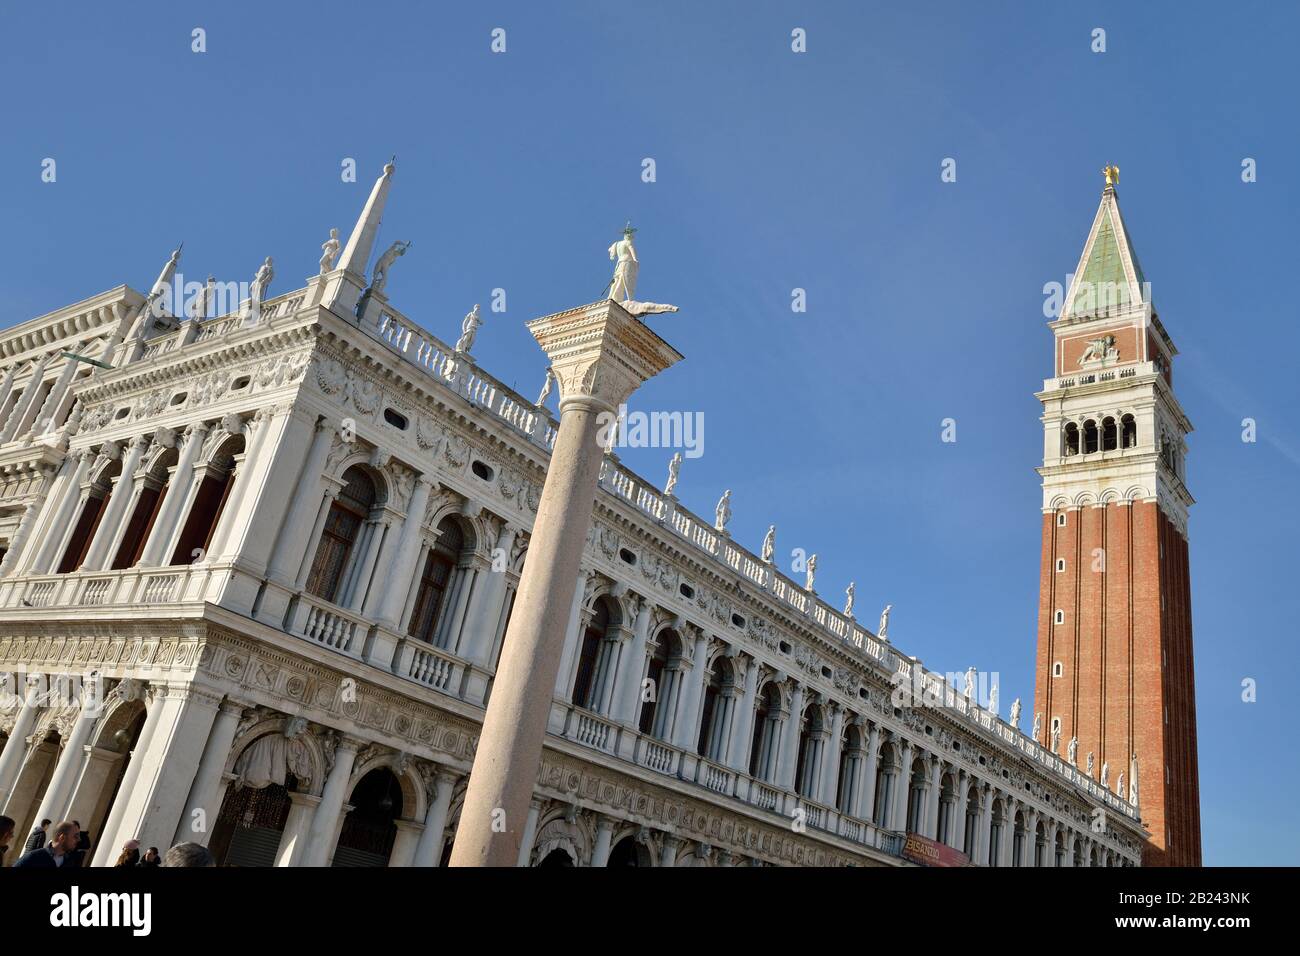 Venedig, Markusplatz - Piazza San Marco (Nationalbibliothek Marciana - Bibliothek Sansovino), UNESCO-Weltkulturerbe - Venetien, Italien, Europa Stockfoto